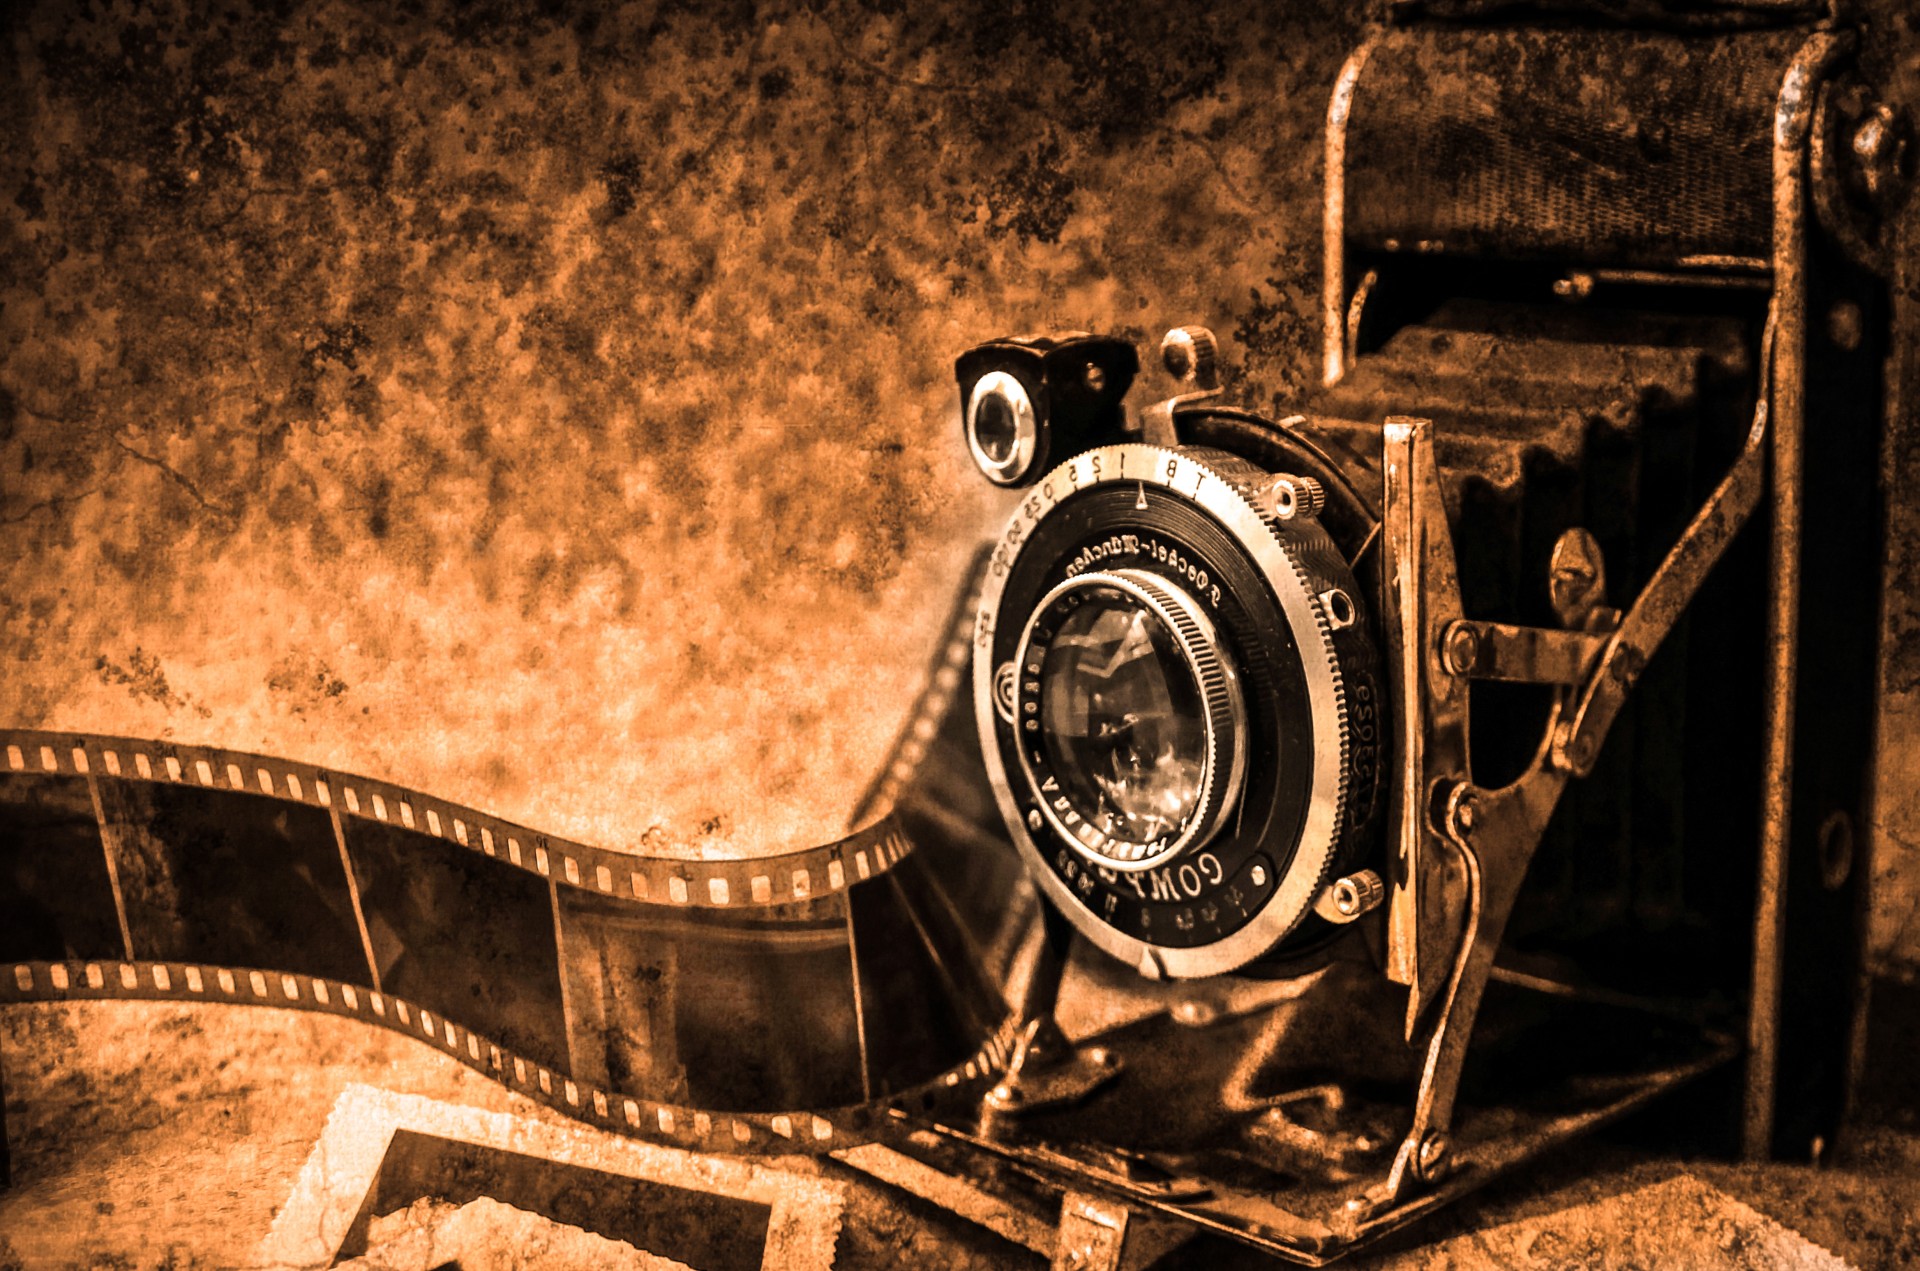 Vintage Film Camera Wallpaper image gallery